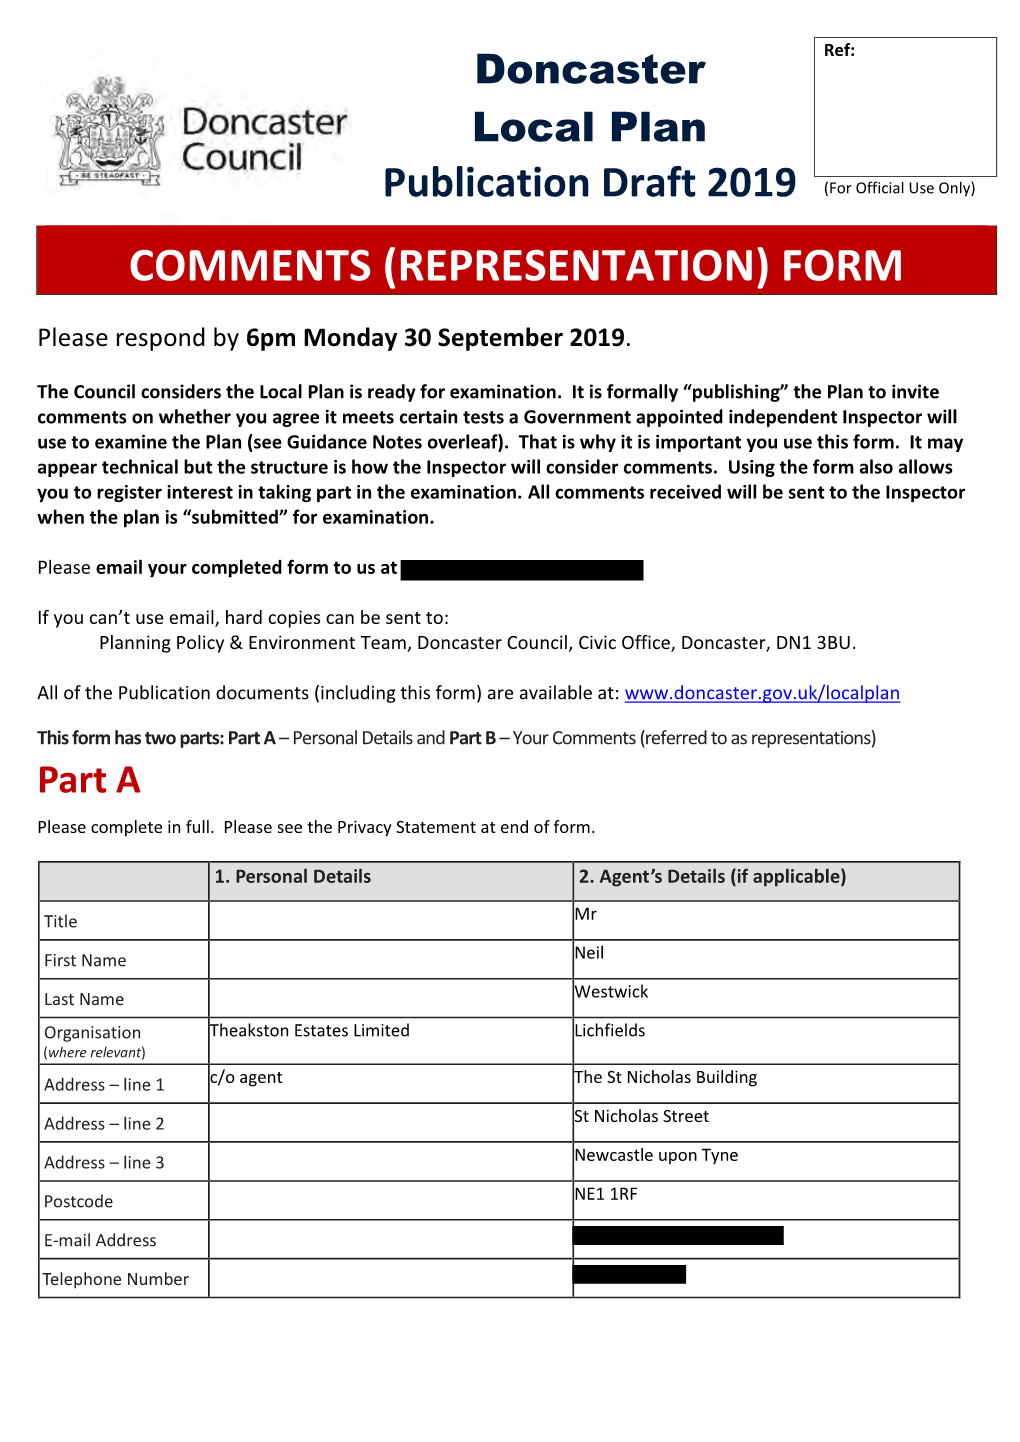 Comments (Representation) Form